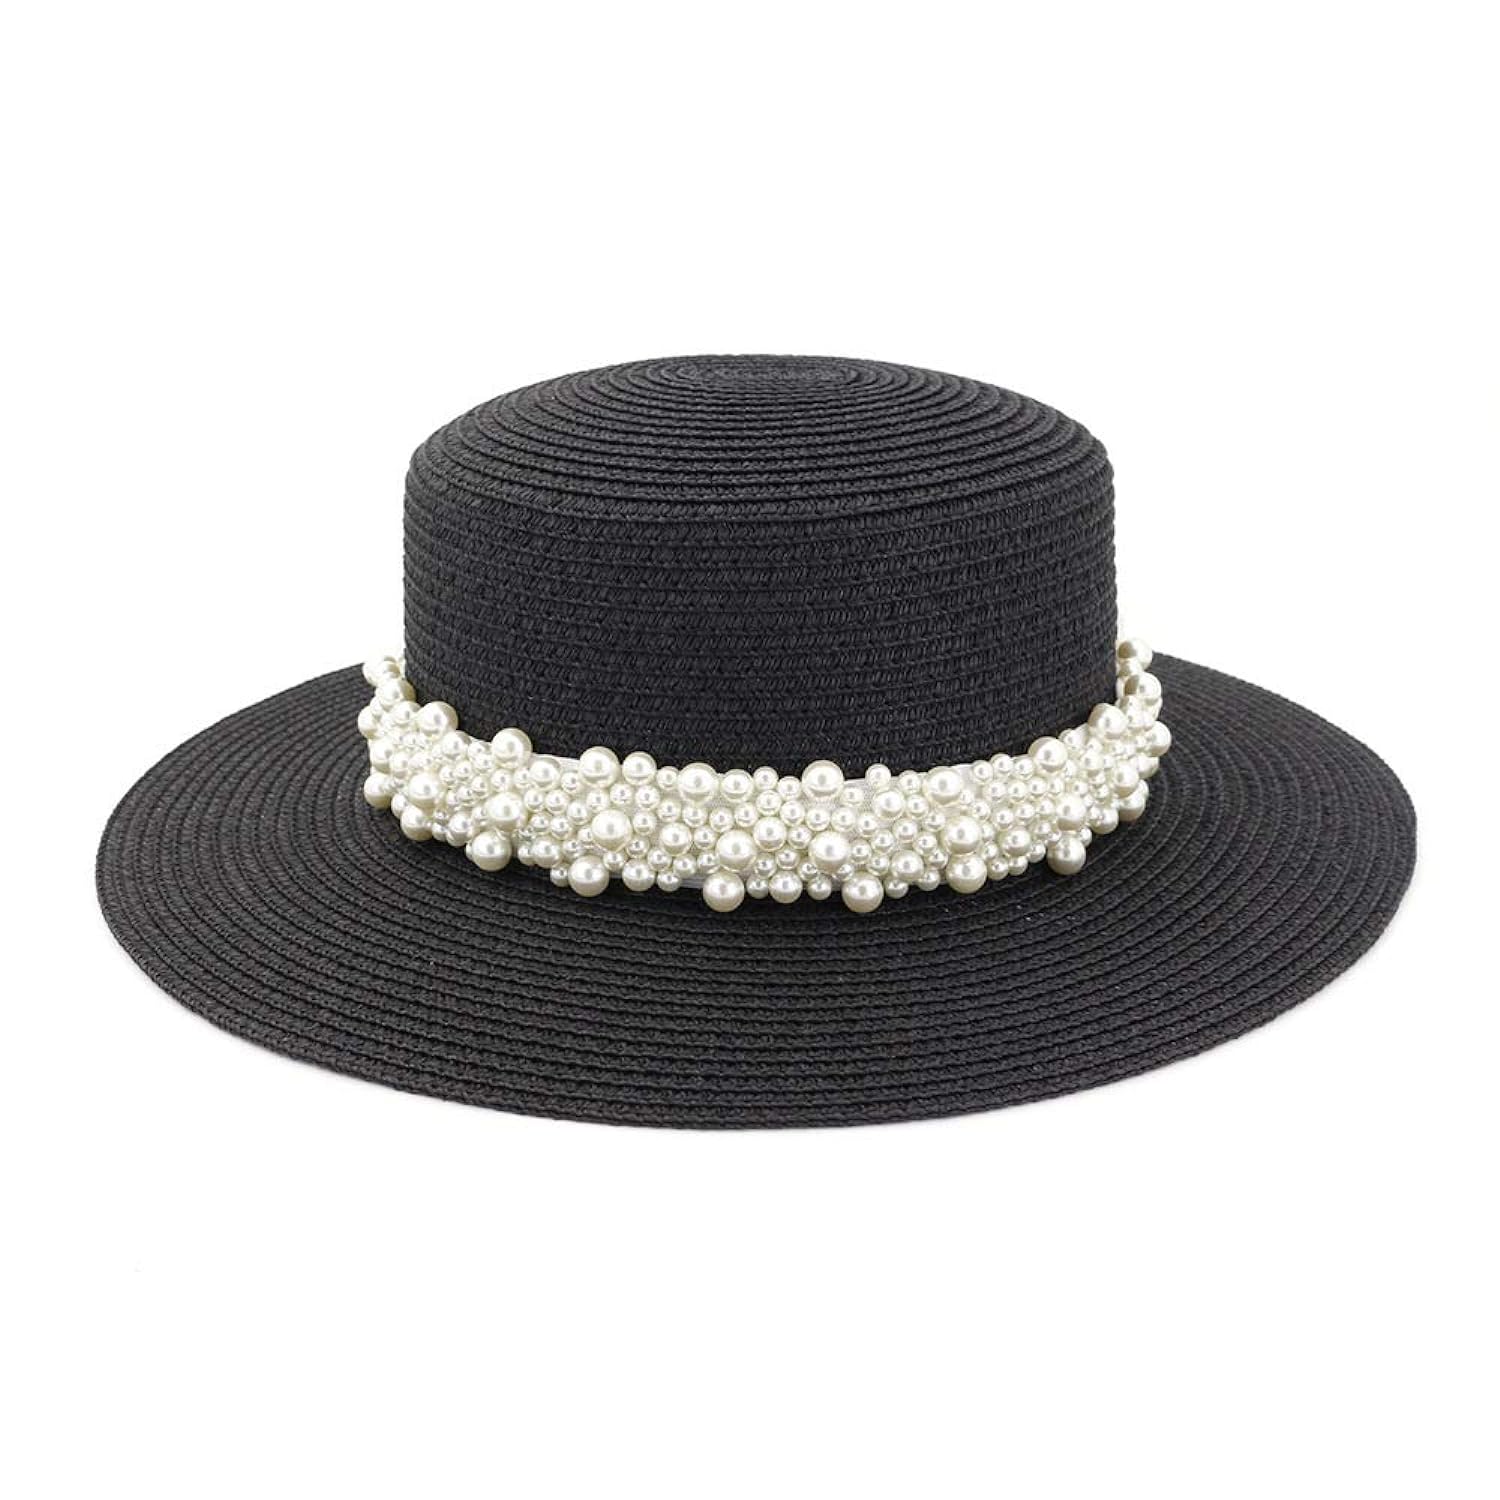 thinkstar Fashion Women'S Brim Flat Top Hat Derby Ladies Floppy Sun Hat Jazz Panama Hats Boater Hat Flat Top Black